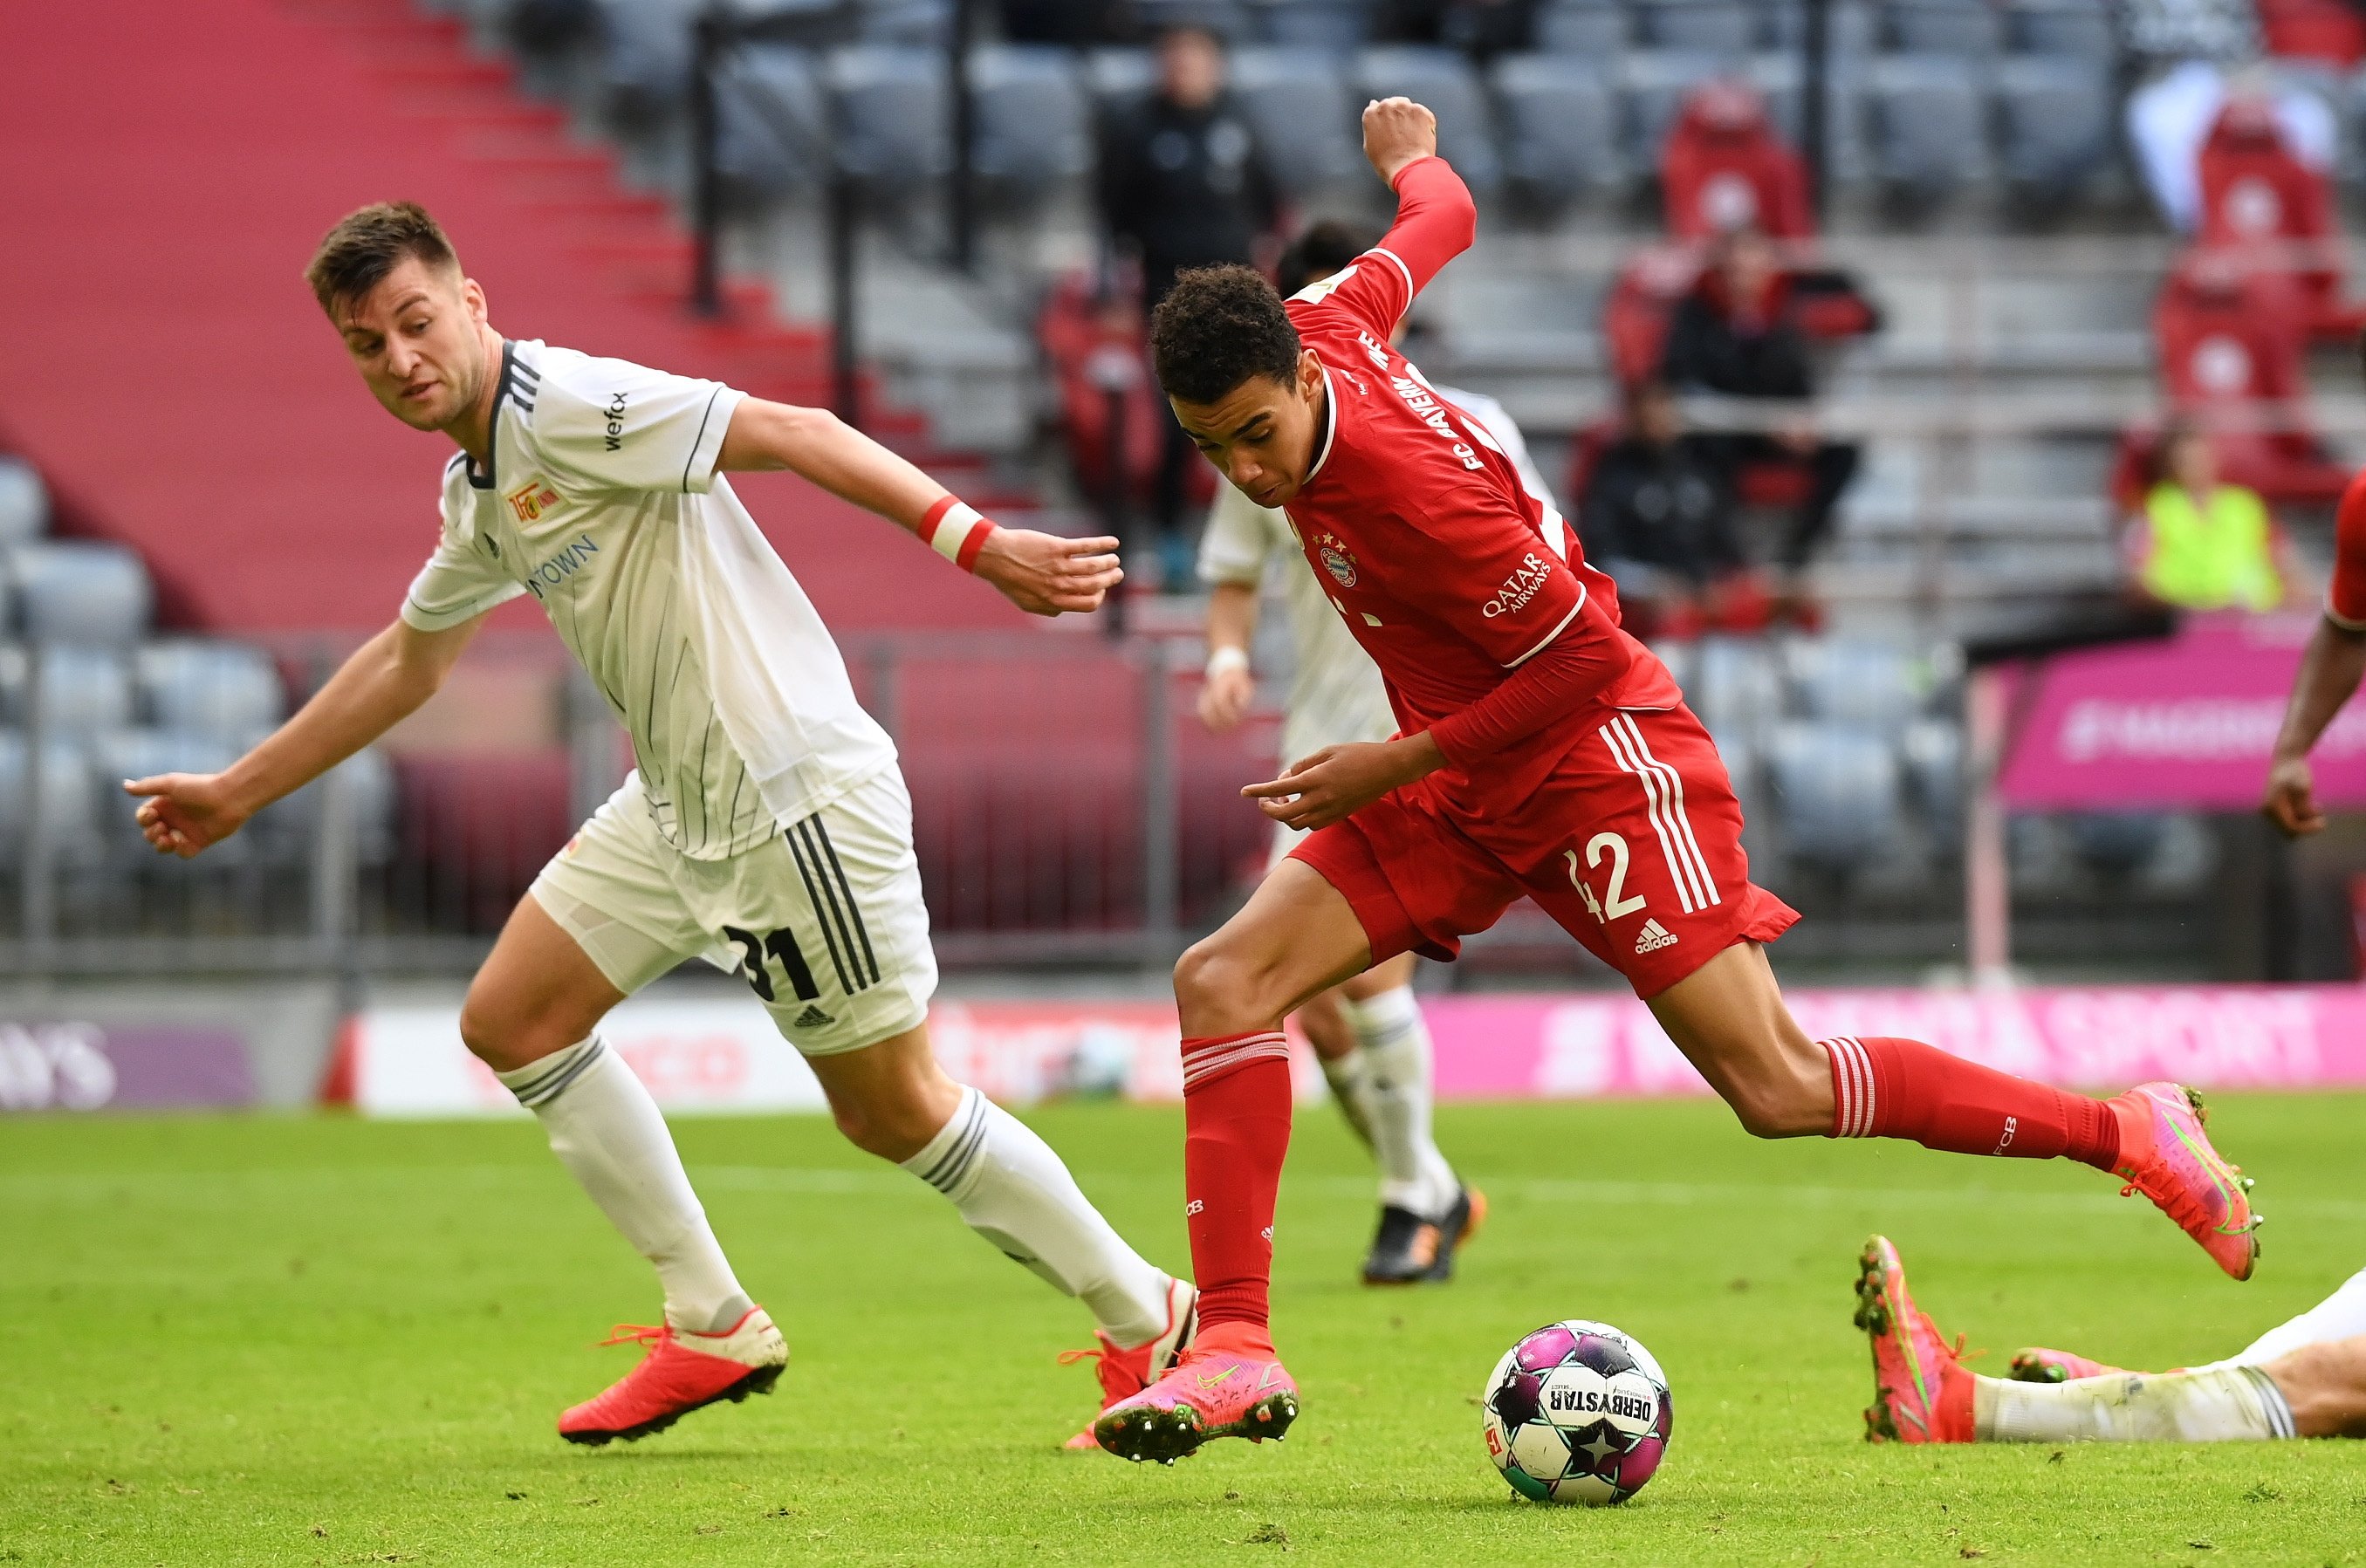 Bayern Munich's Jamal Musiala (R) scores his team's first goal during the Bundesliga soccer match against 1. FC Union Berlin at Allianz Arena in Munich, Germany, April 10, 2021. (Matthias Hangst/DFL/Pool via EPA)